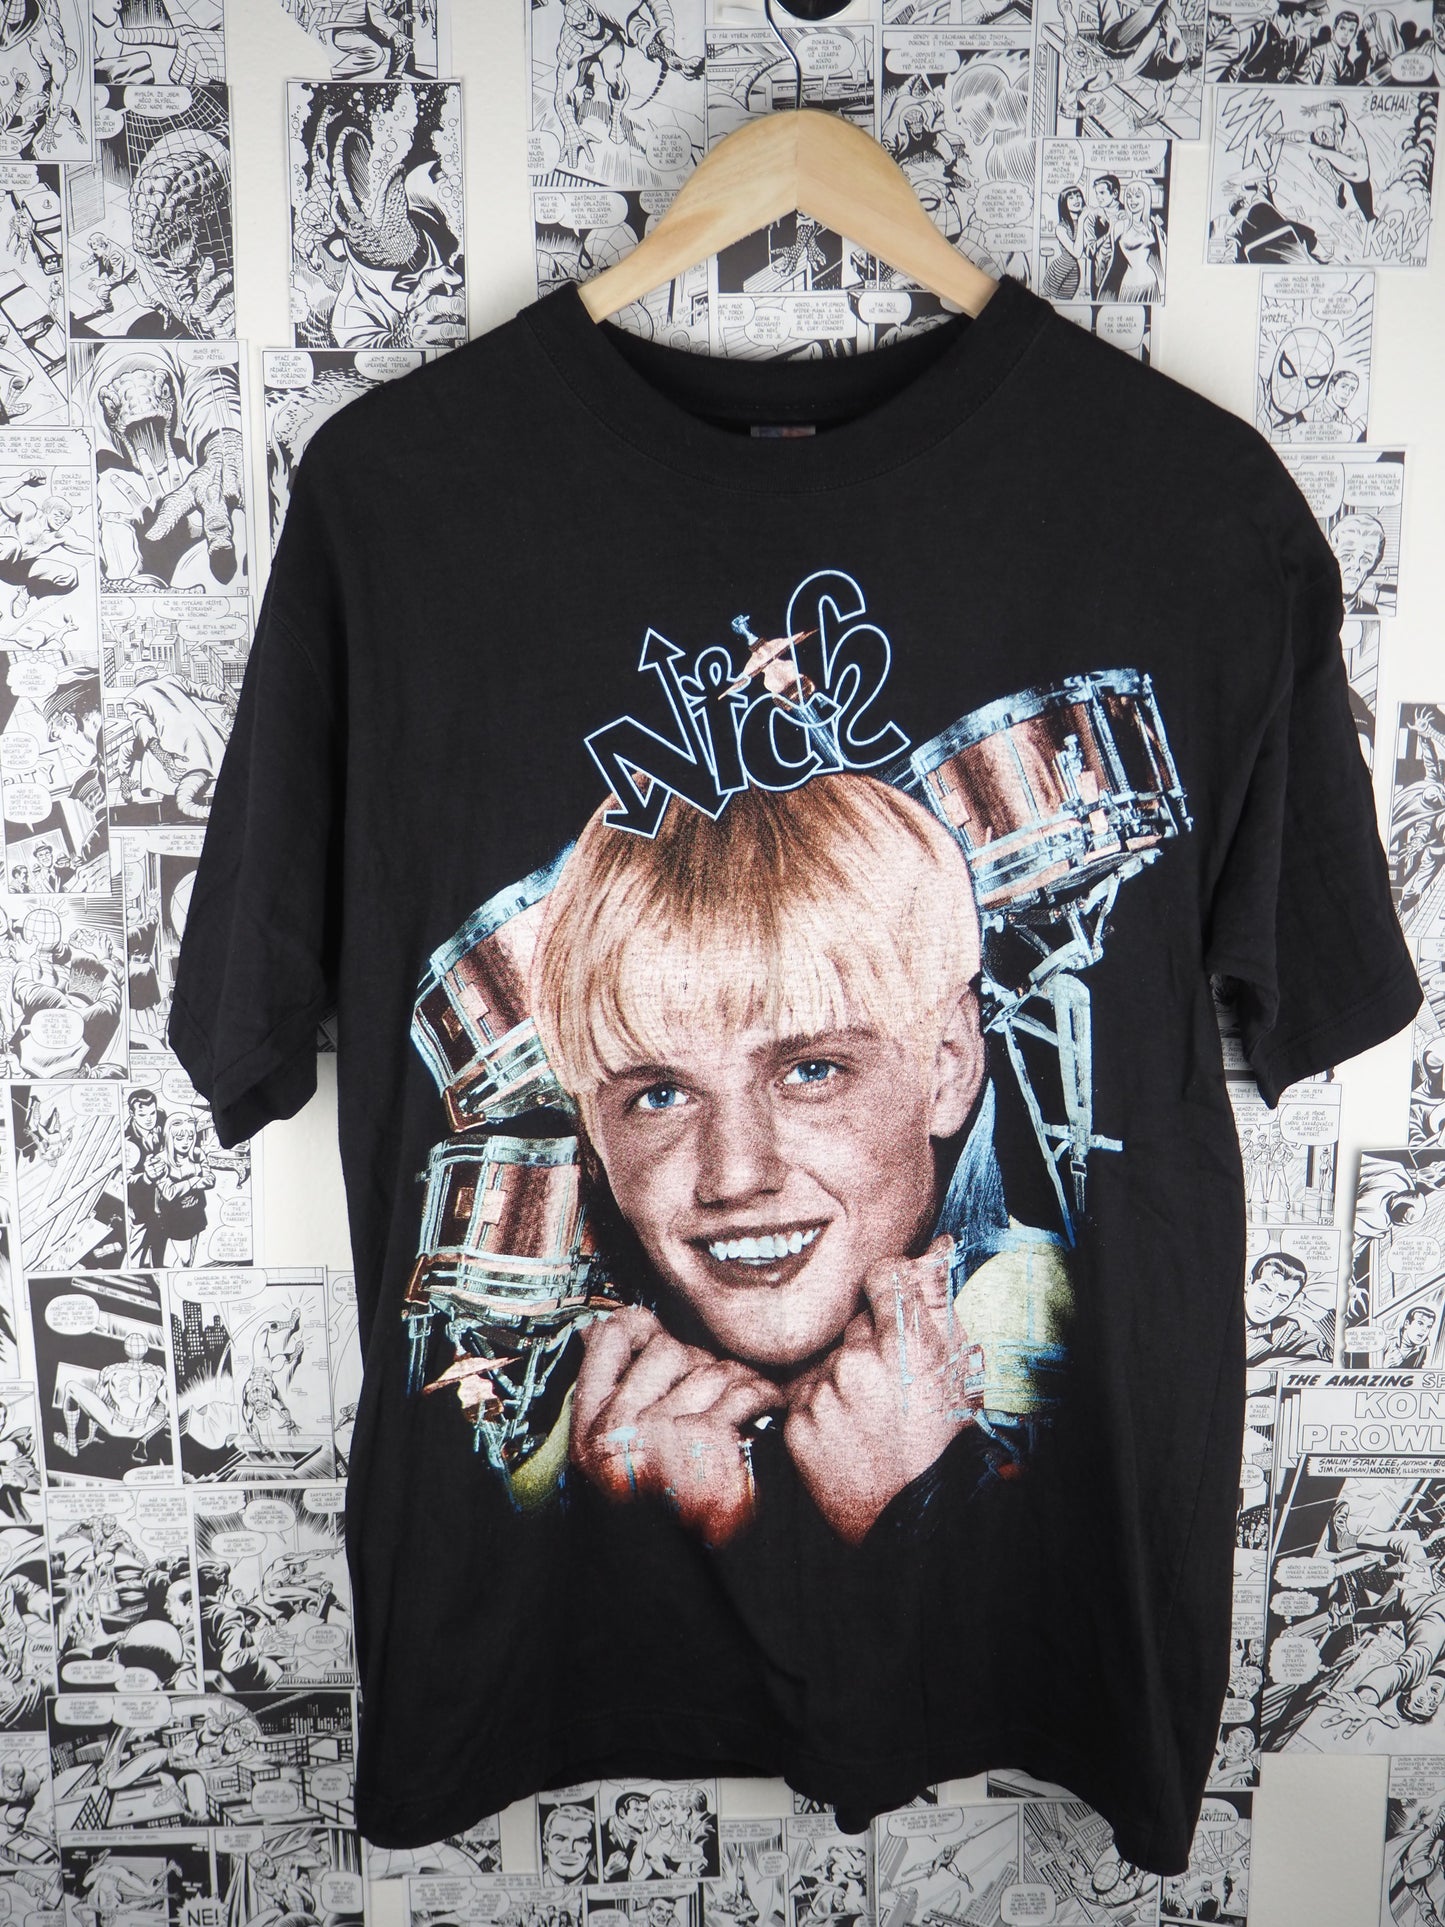 Vintage "Nick Carter" Back Street Boys 90s t-shirt - size L